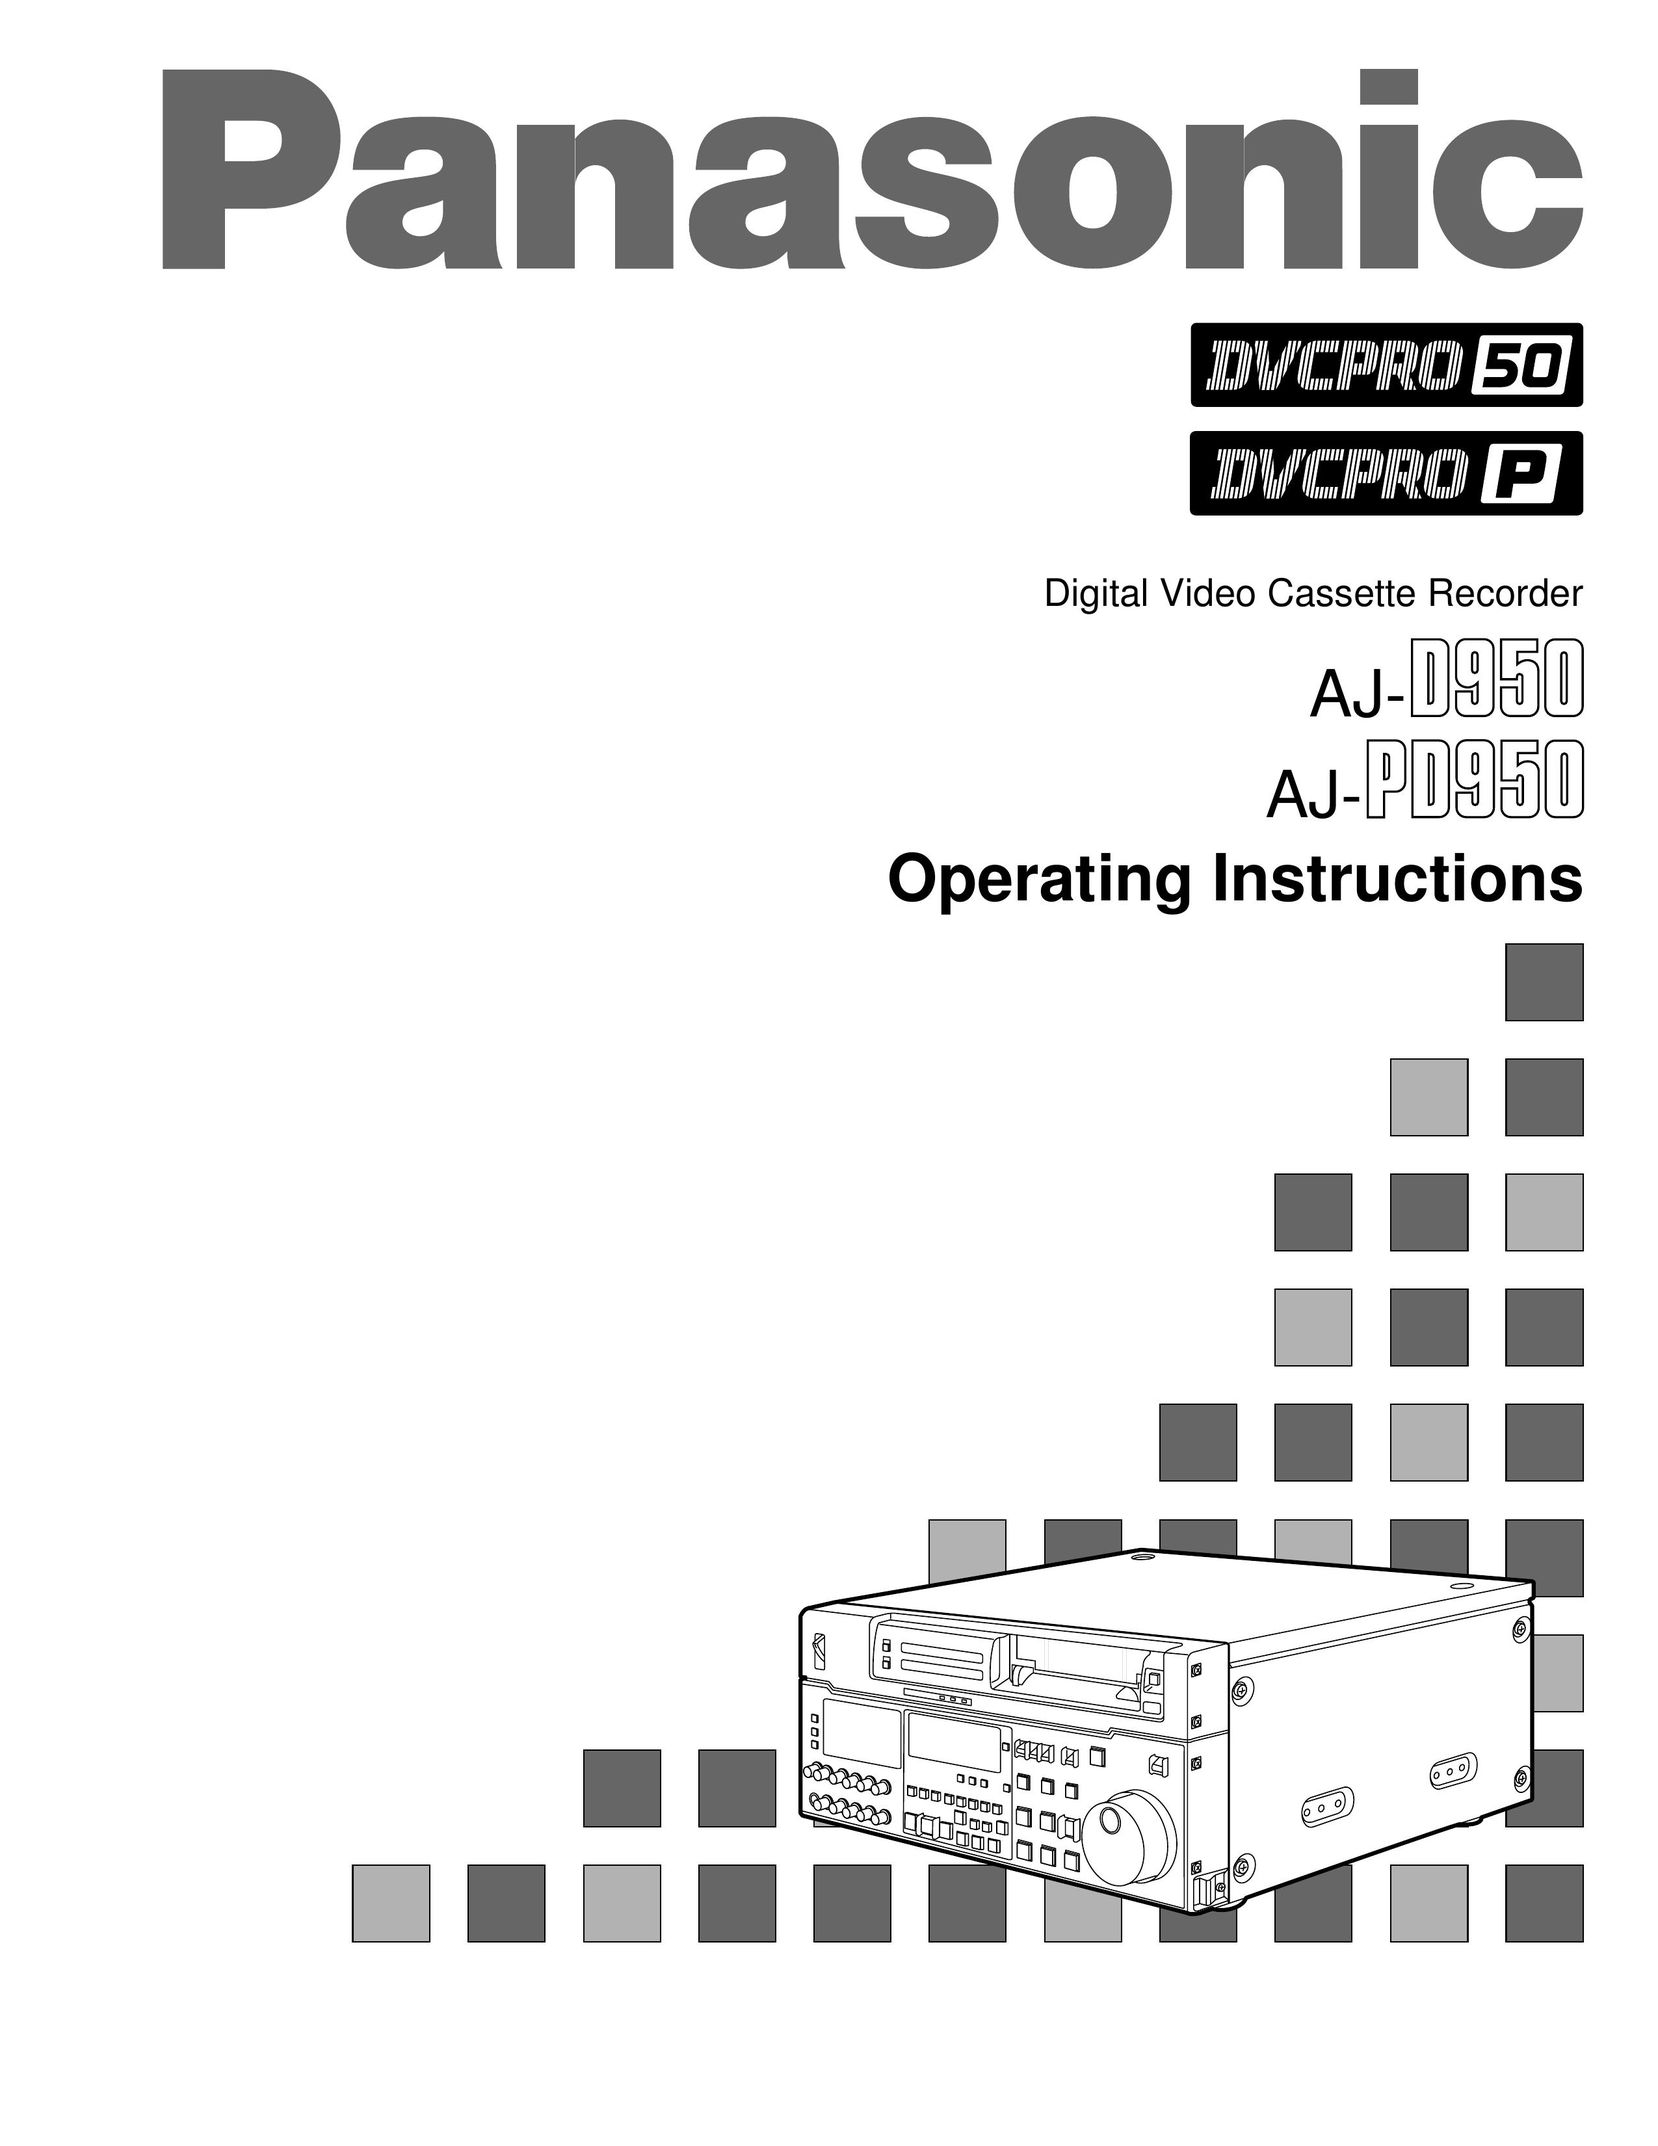 Panasonic AJ-D950 DVR User Manual